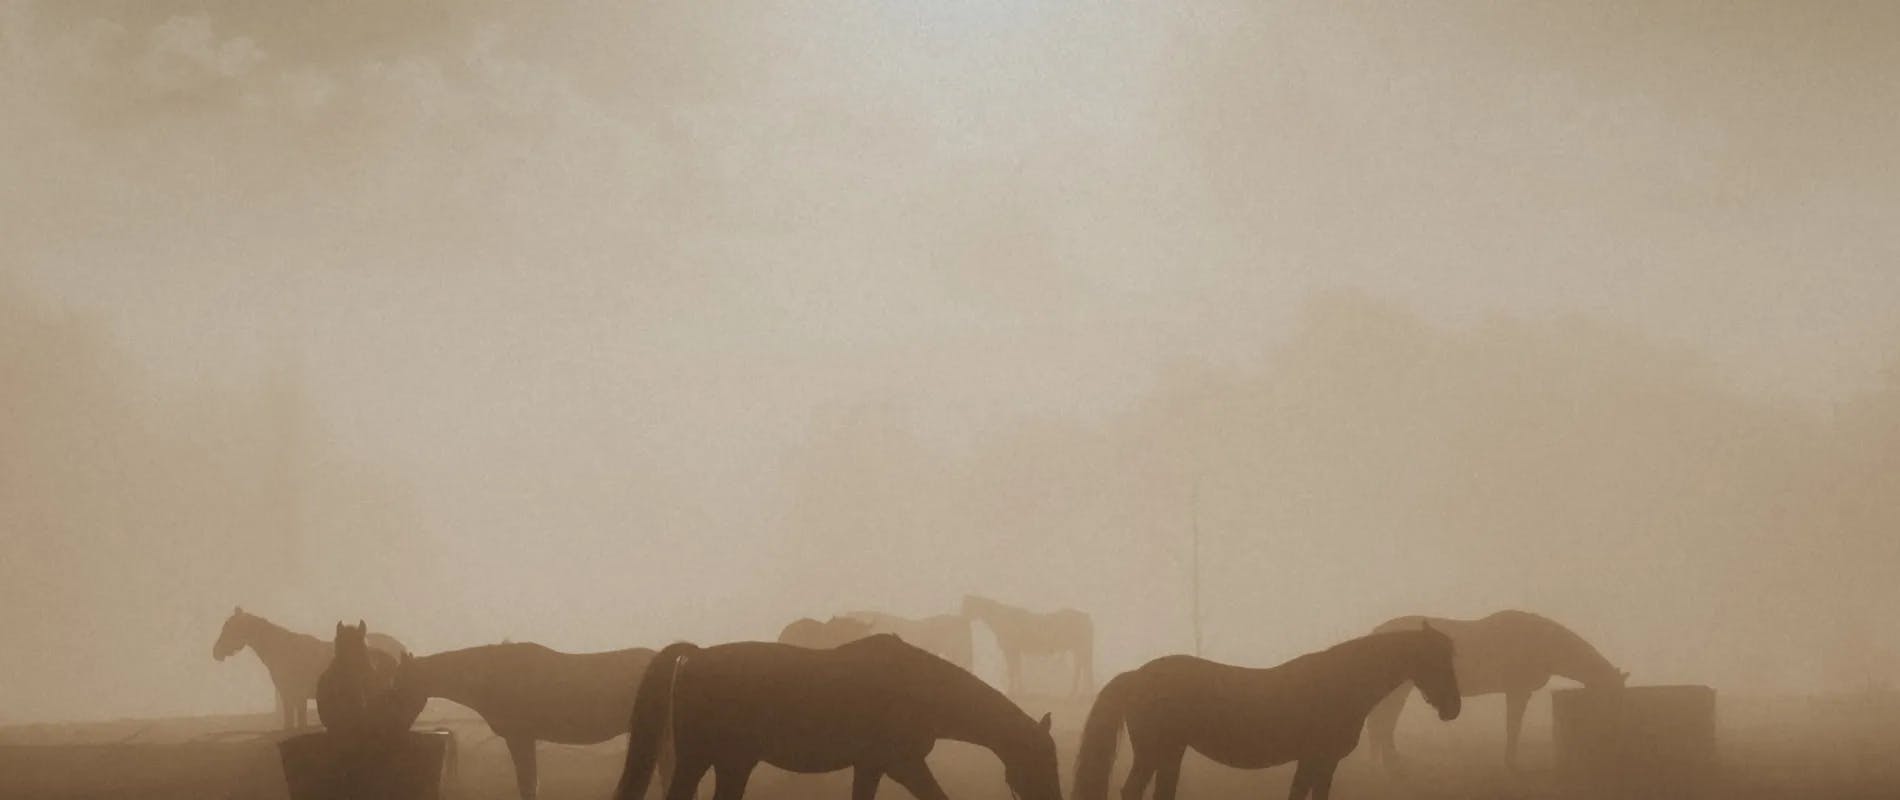 Horse silhouettes in a smoky haze